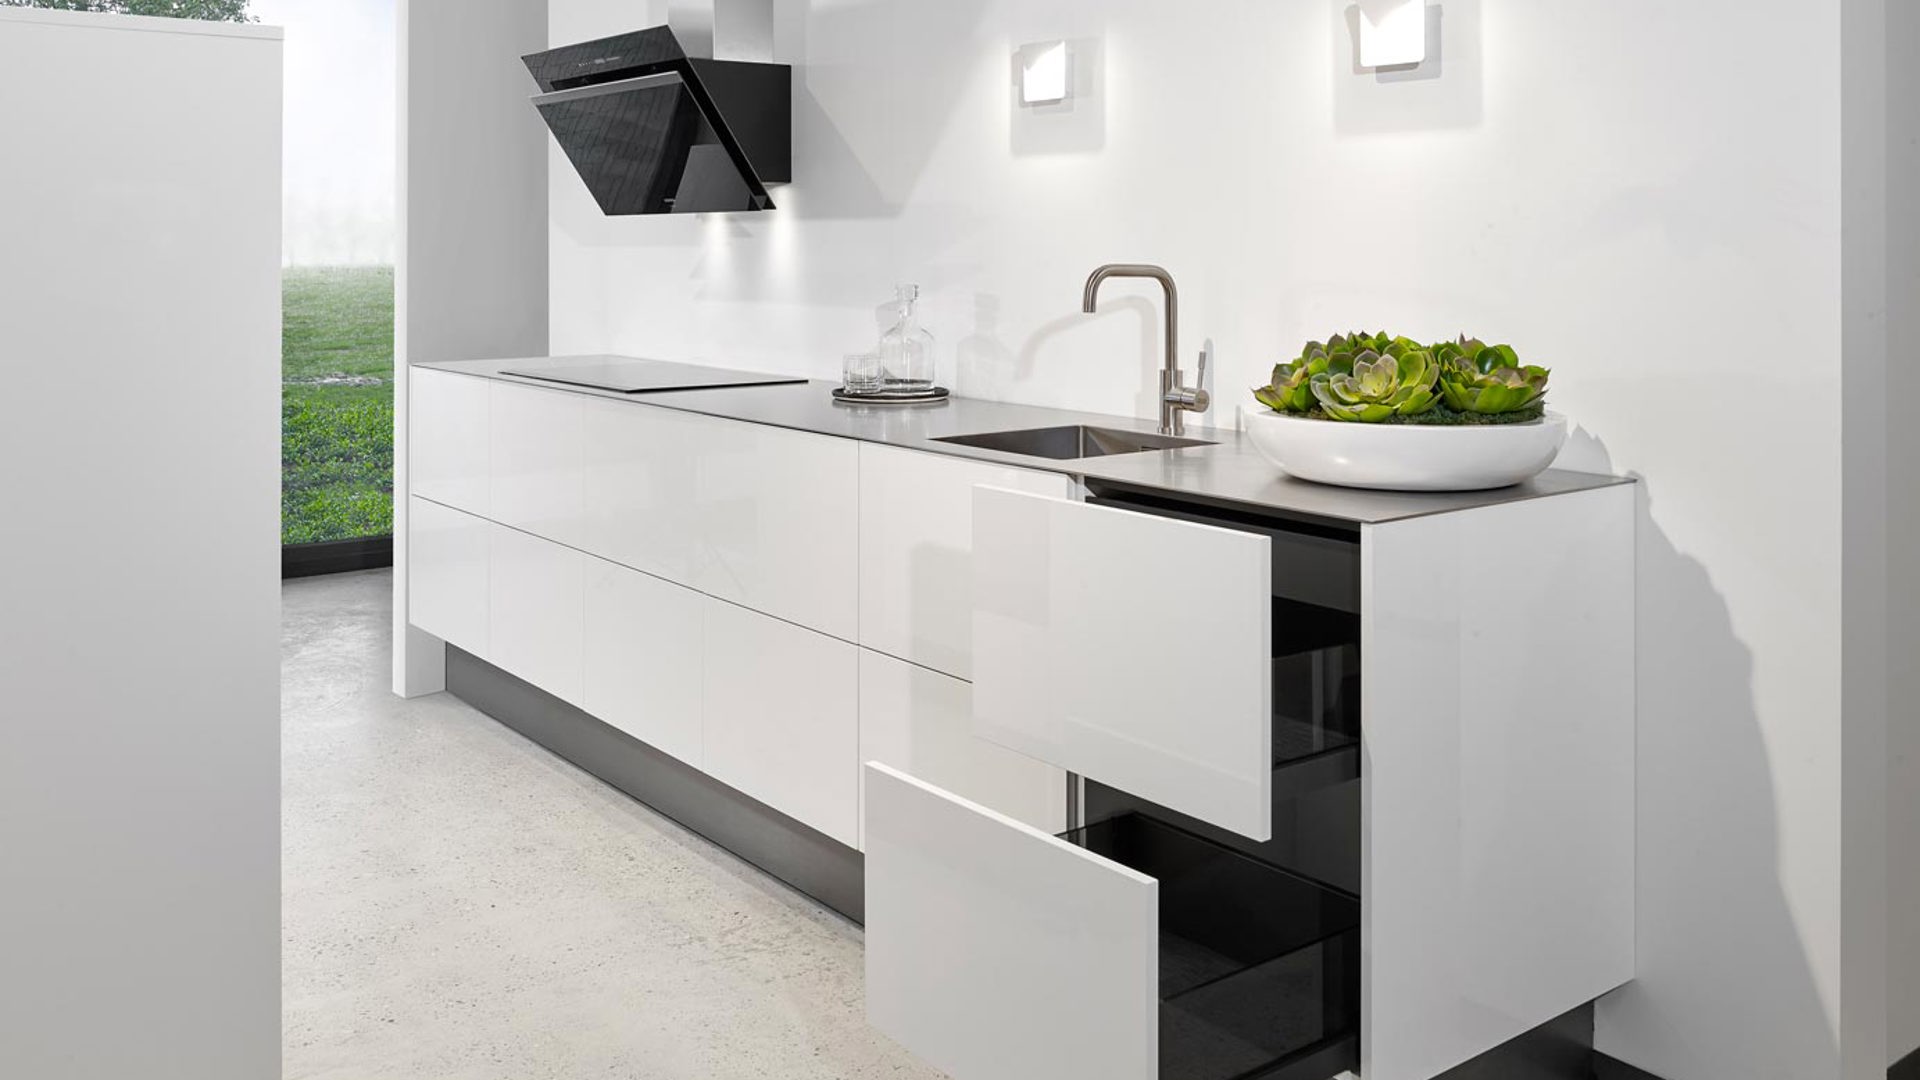 Moderne witte keuken met strak design